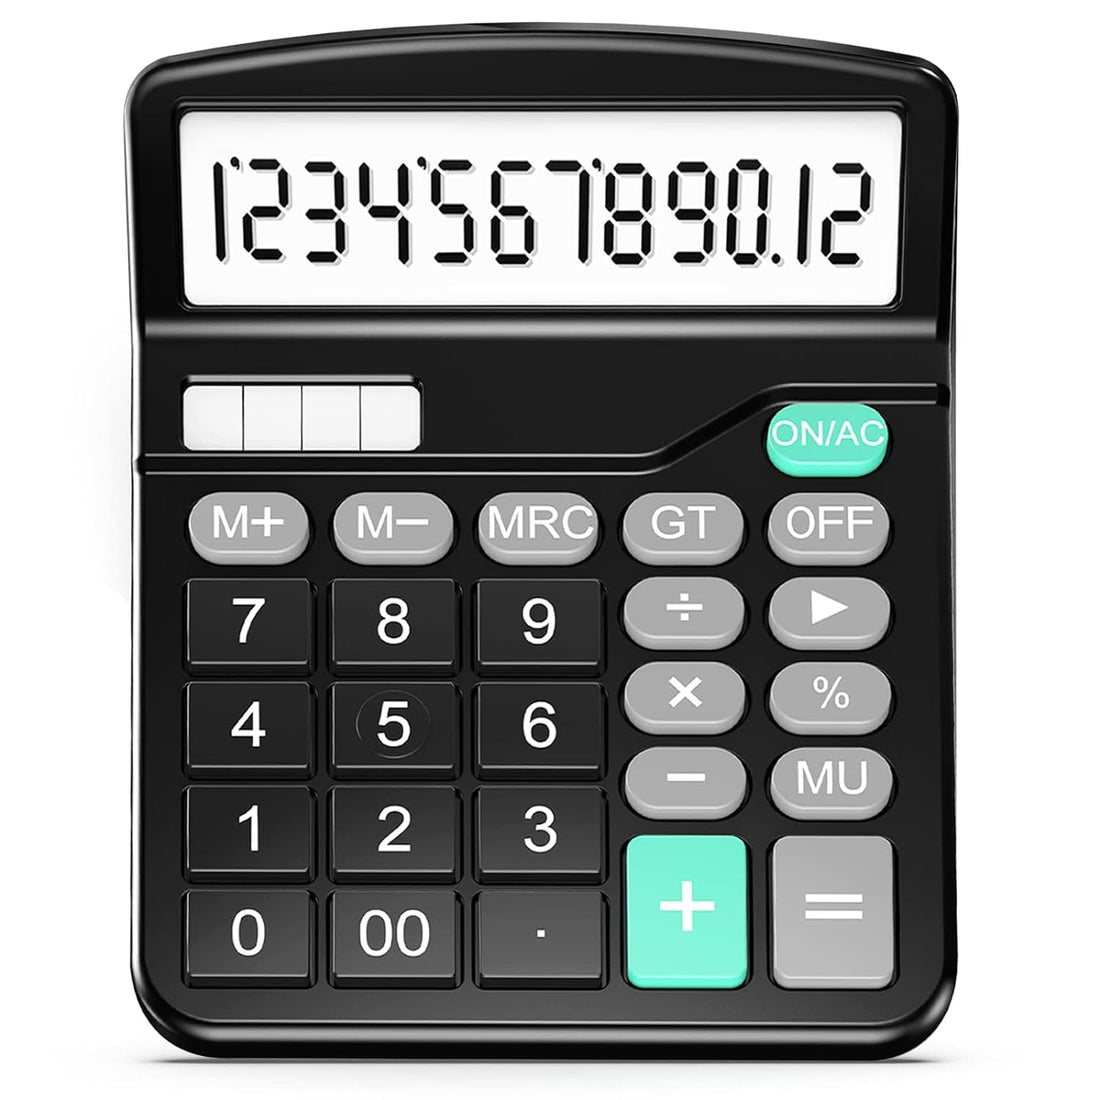 Calculator, Splaks Standard Functional Desktop Calculators Sola and AA Battery Dual Power Electronic Calculator Black